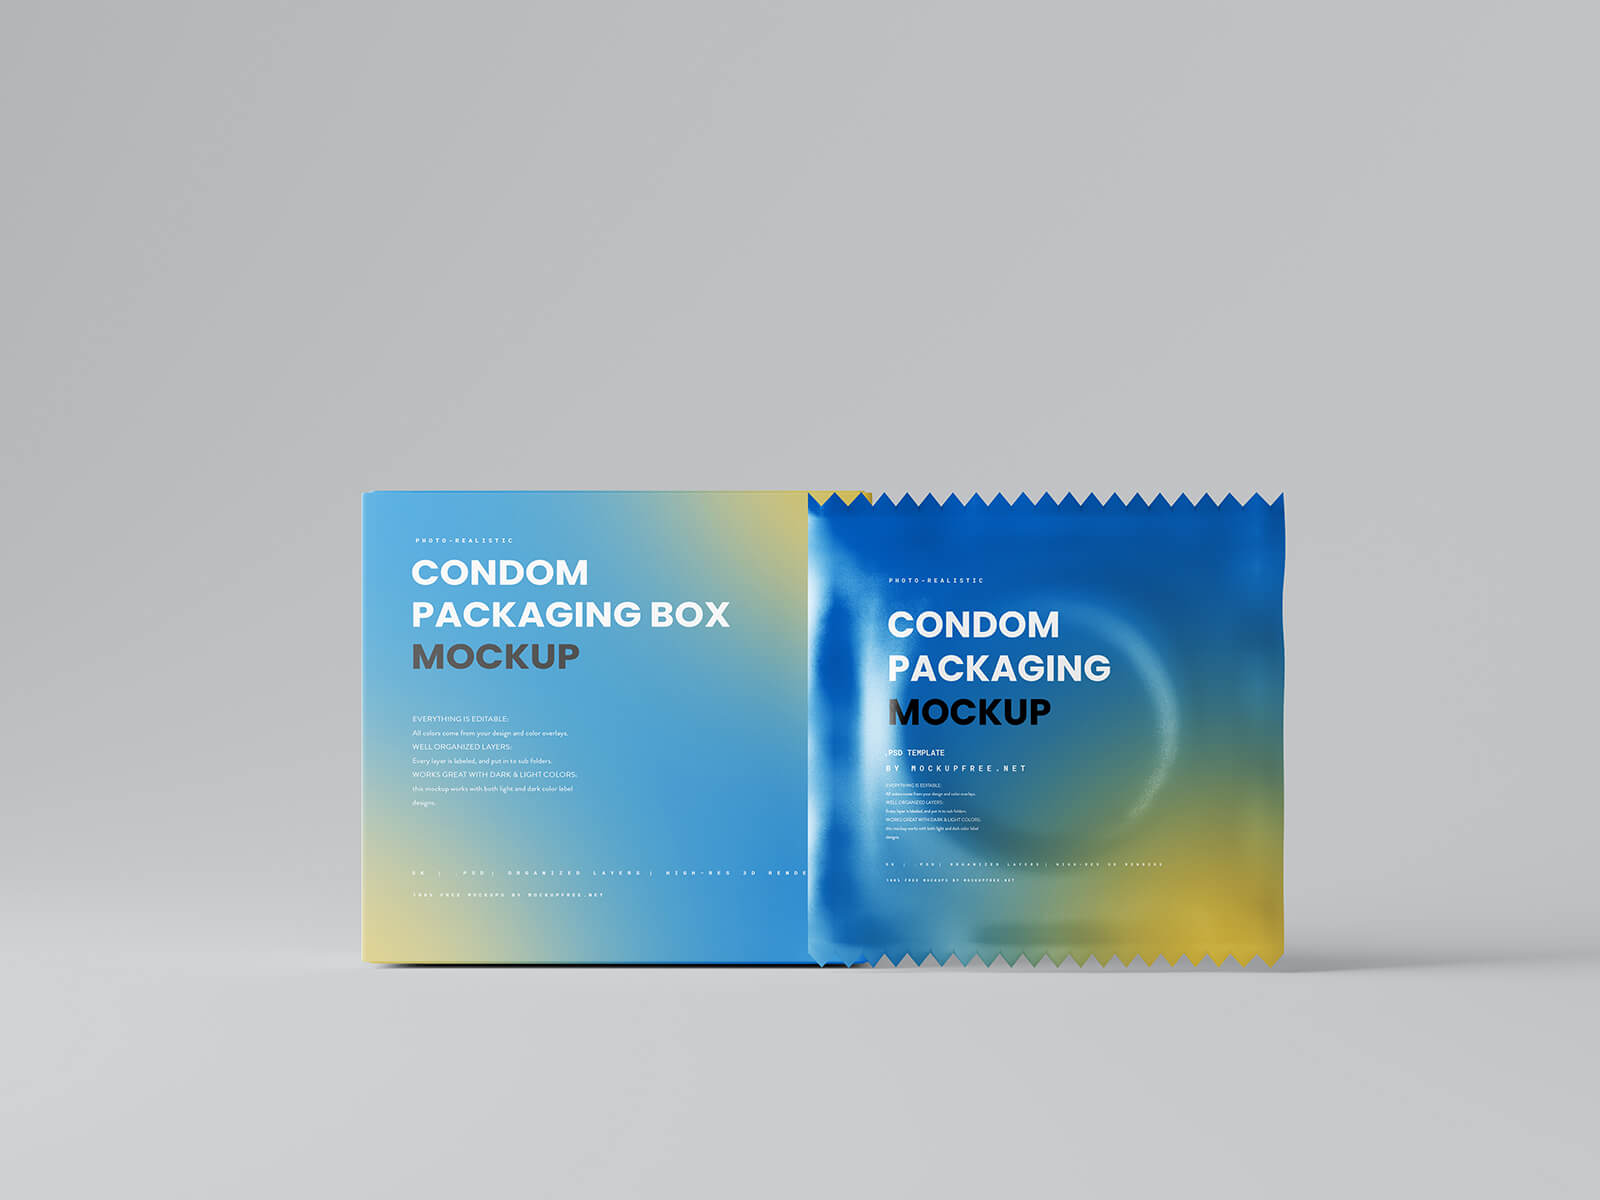 Free Condom Sachet & Packaging Box Mockup PSD